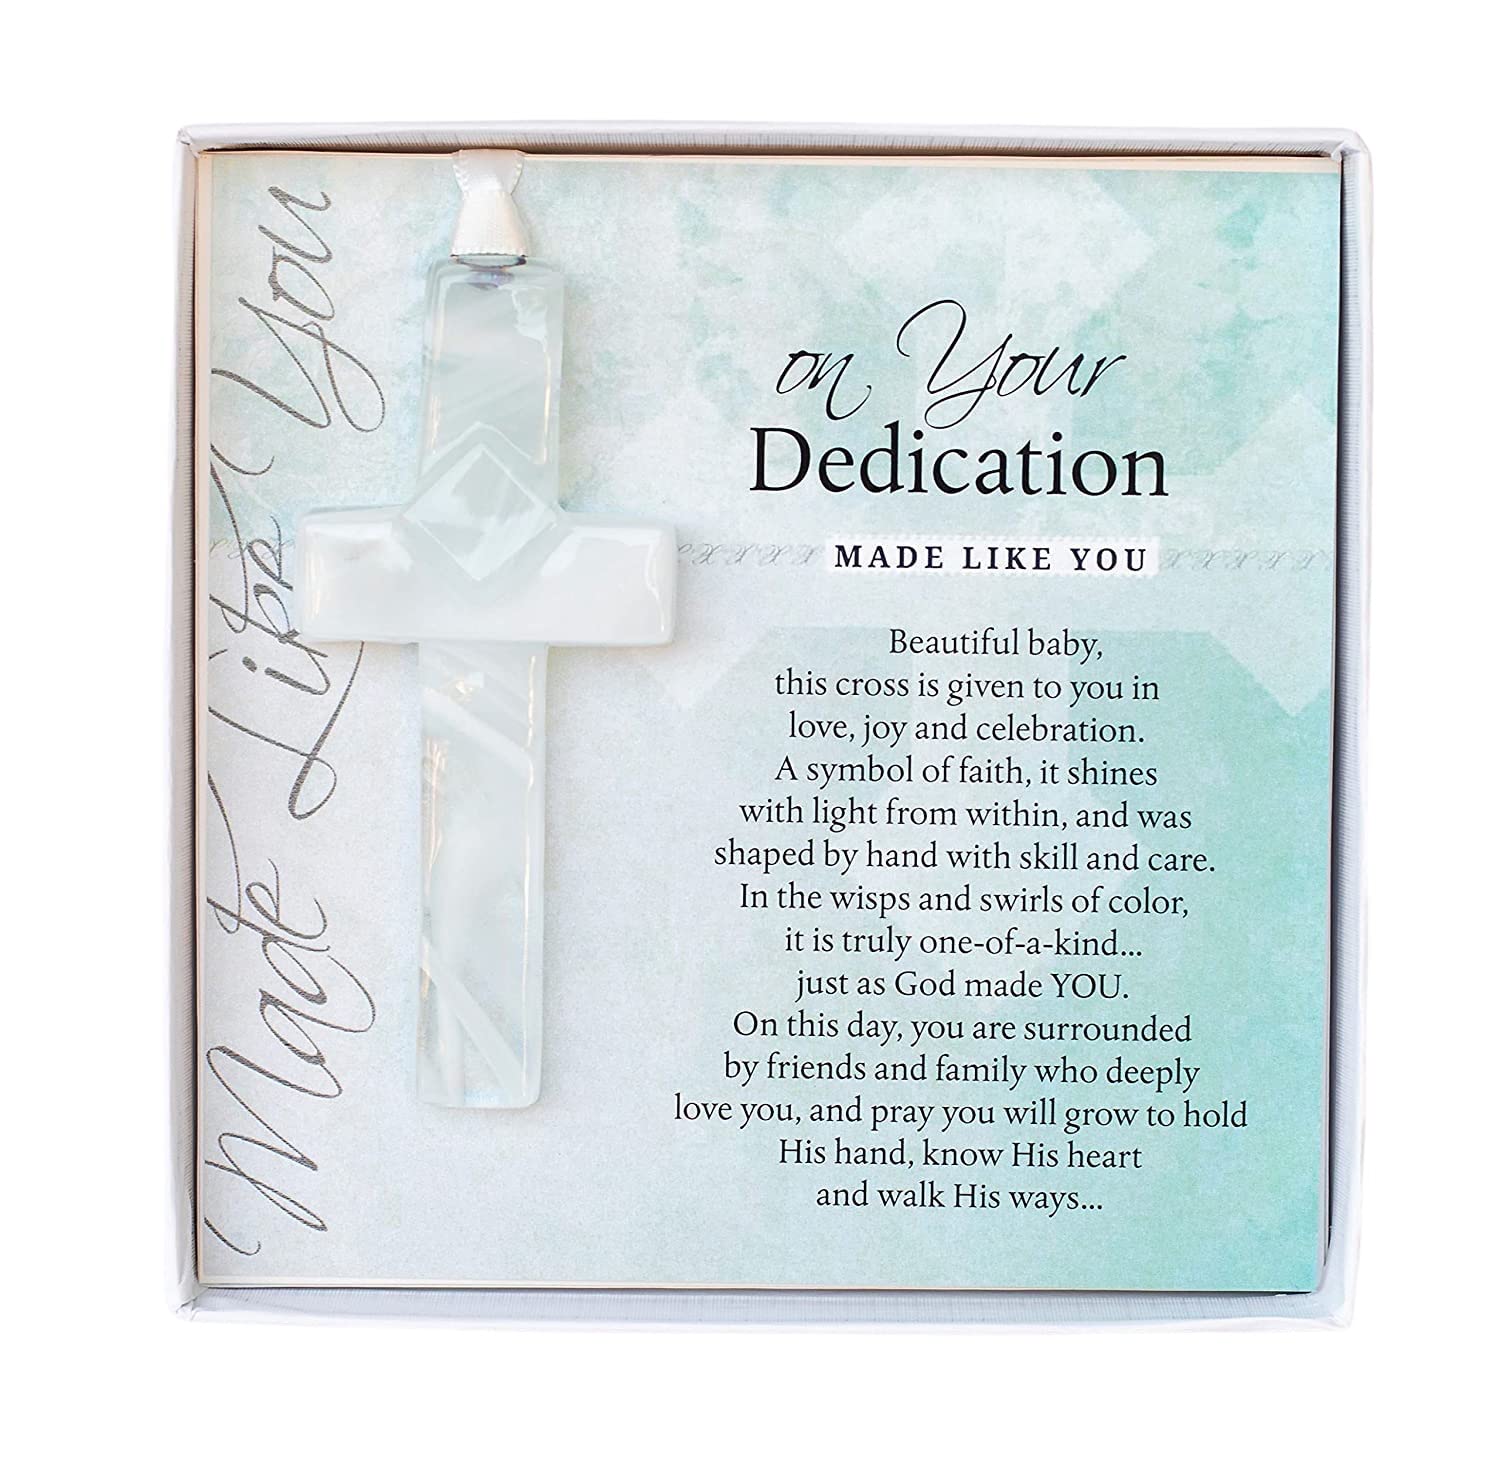 Handmade in USA Glass Cross With Sentiment - Perfect Baby Dedication Gift/Keepsake